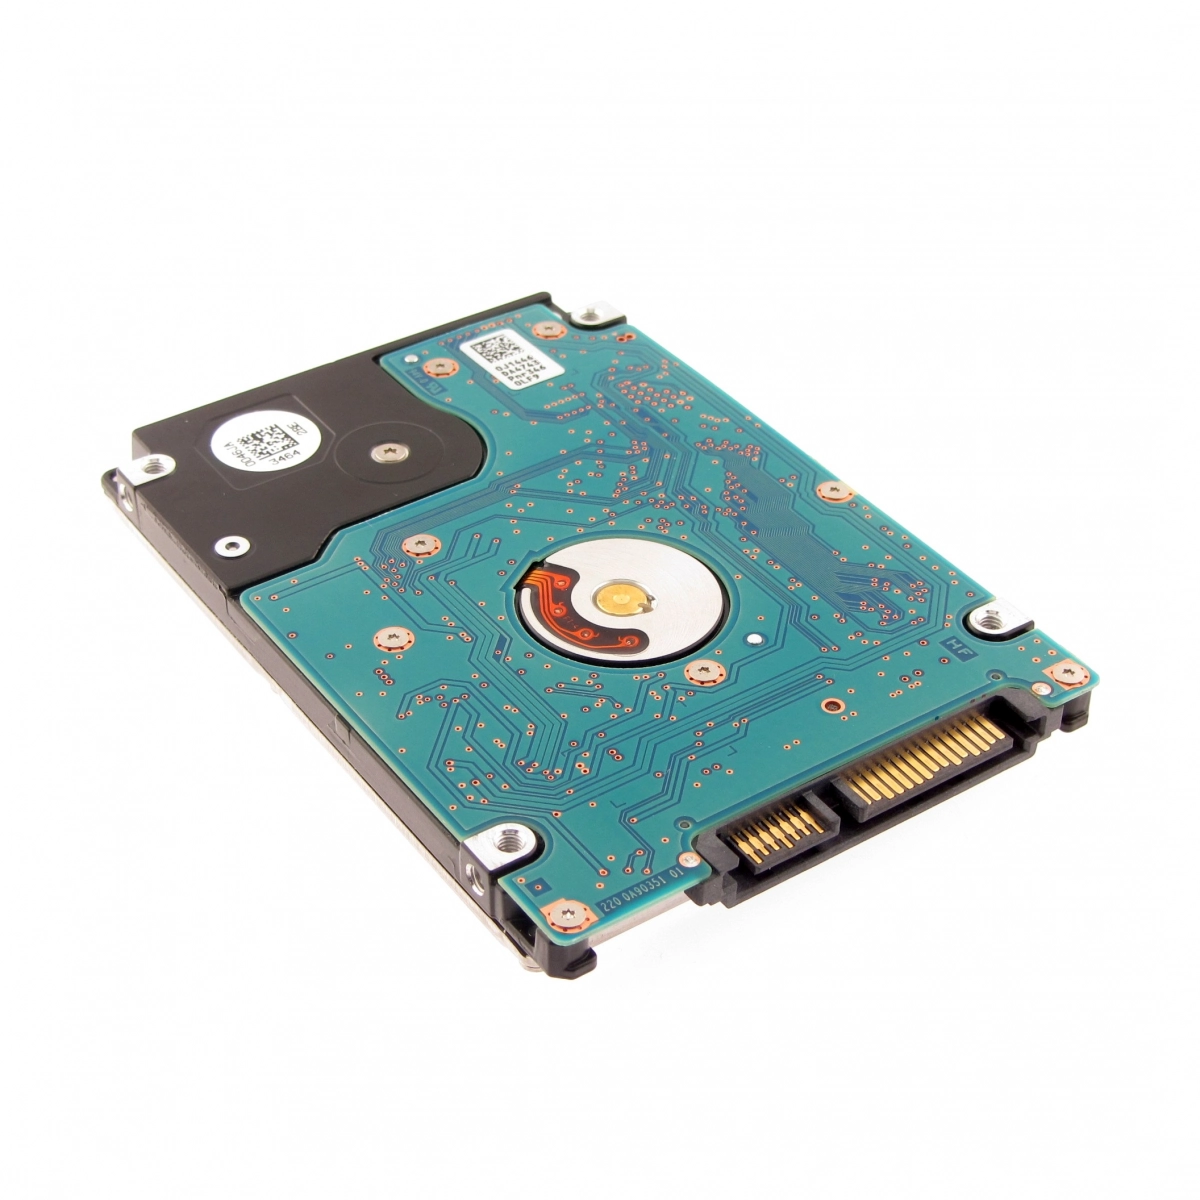 Notebook-Festplatte 1TB, 7mm, 7200rpm, 128MB für PACKARD BELL EasyNote LJ65